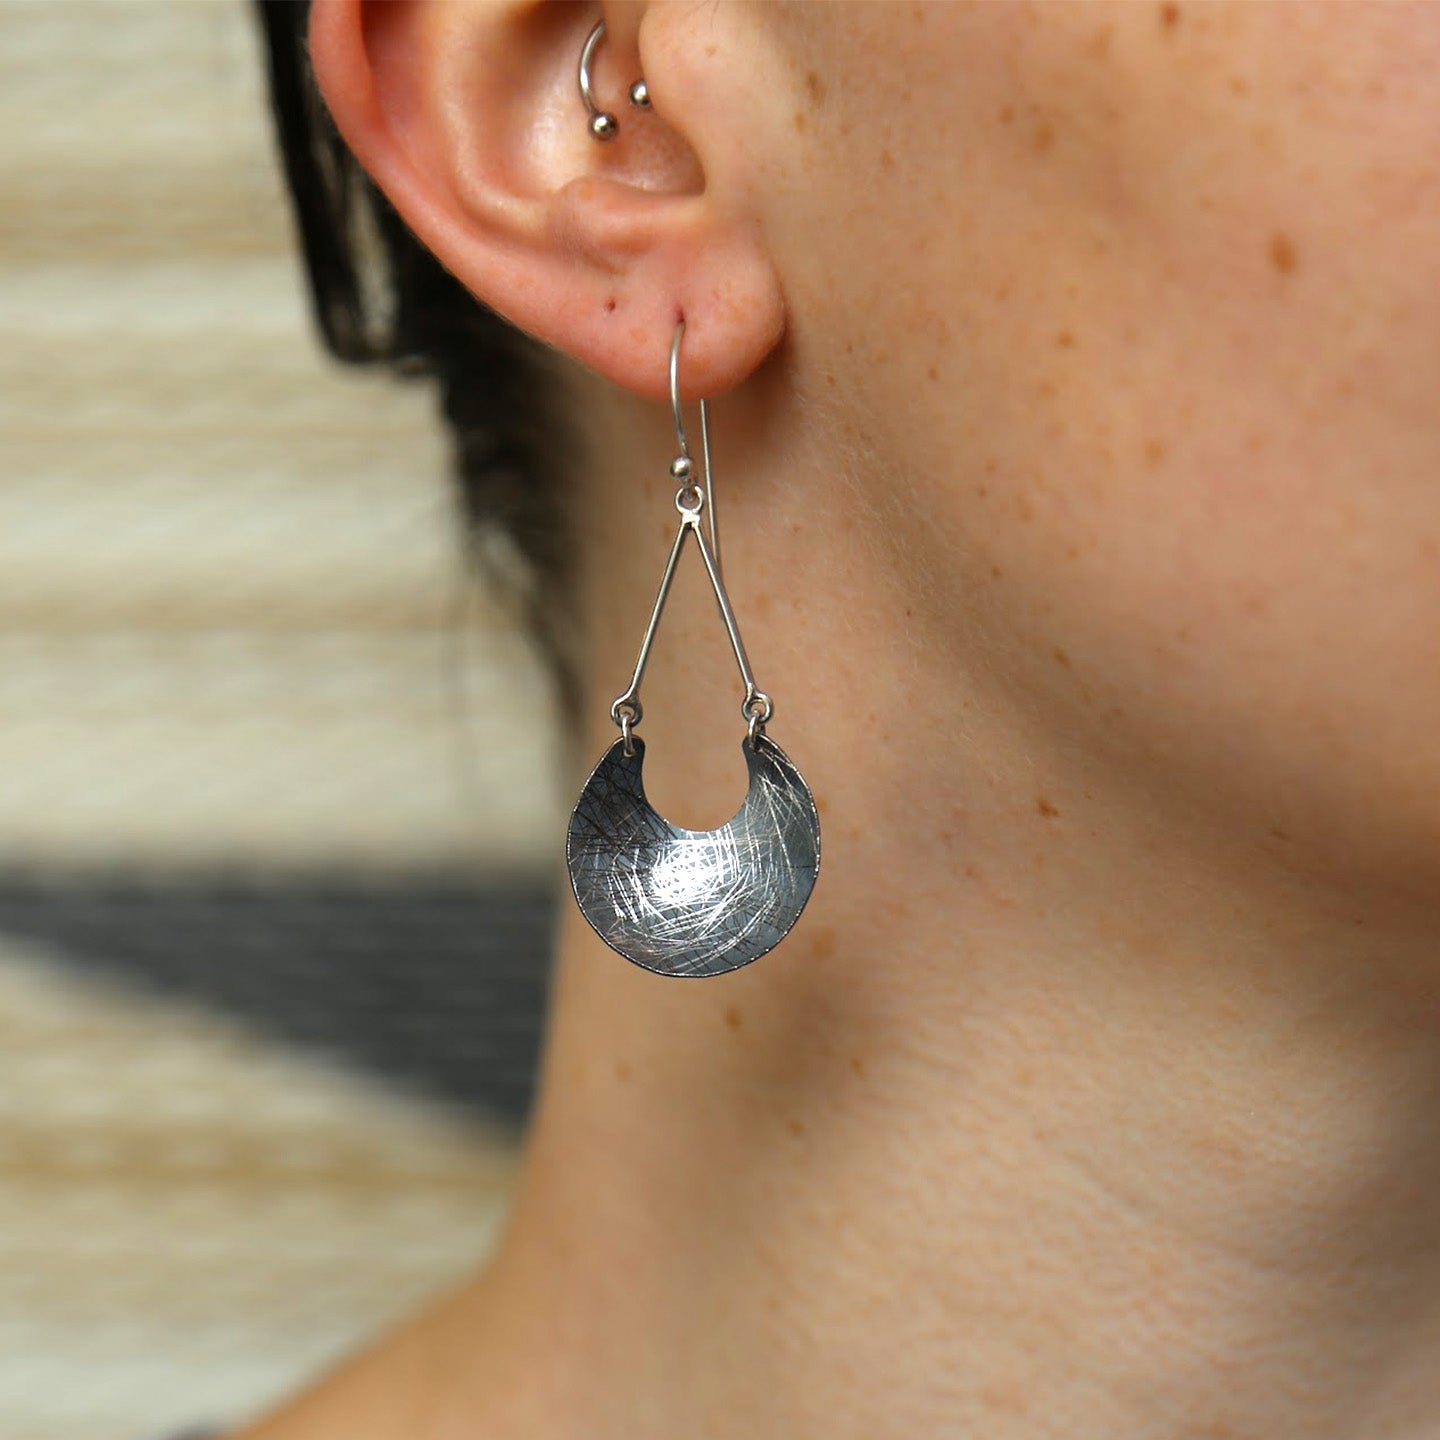 Anni Maliki Jewelry / Nocturne Earrings + sett – One Mercantile / Sett